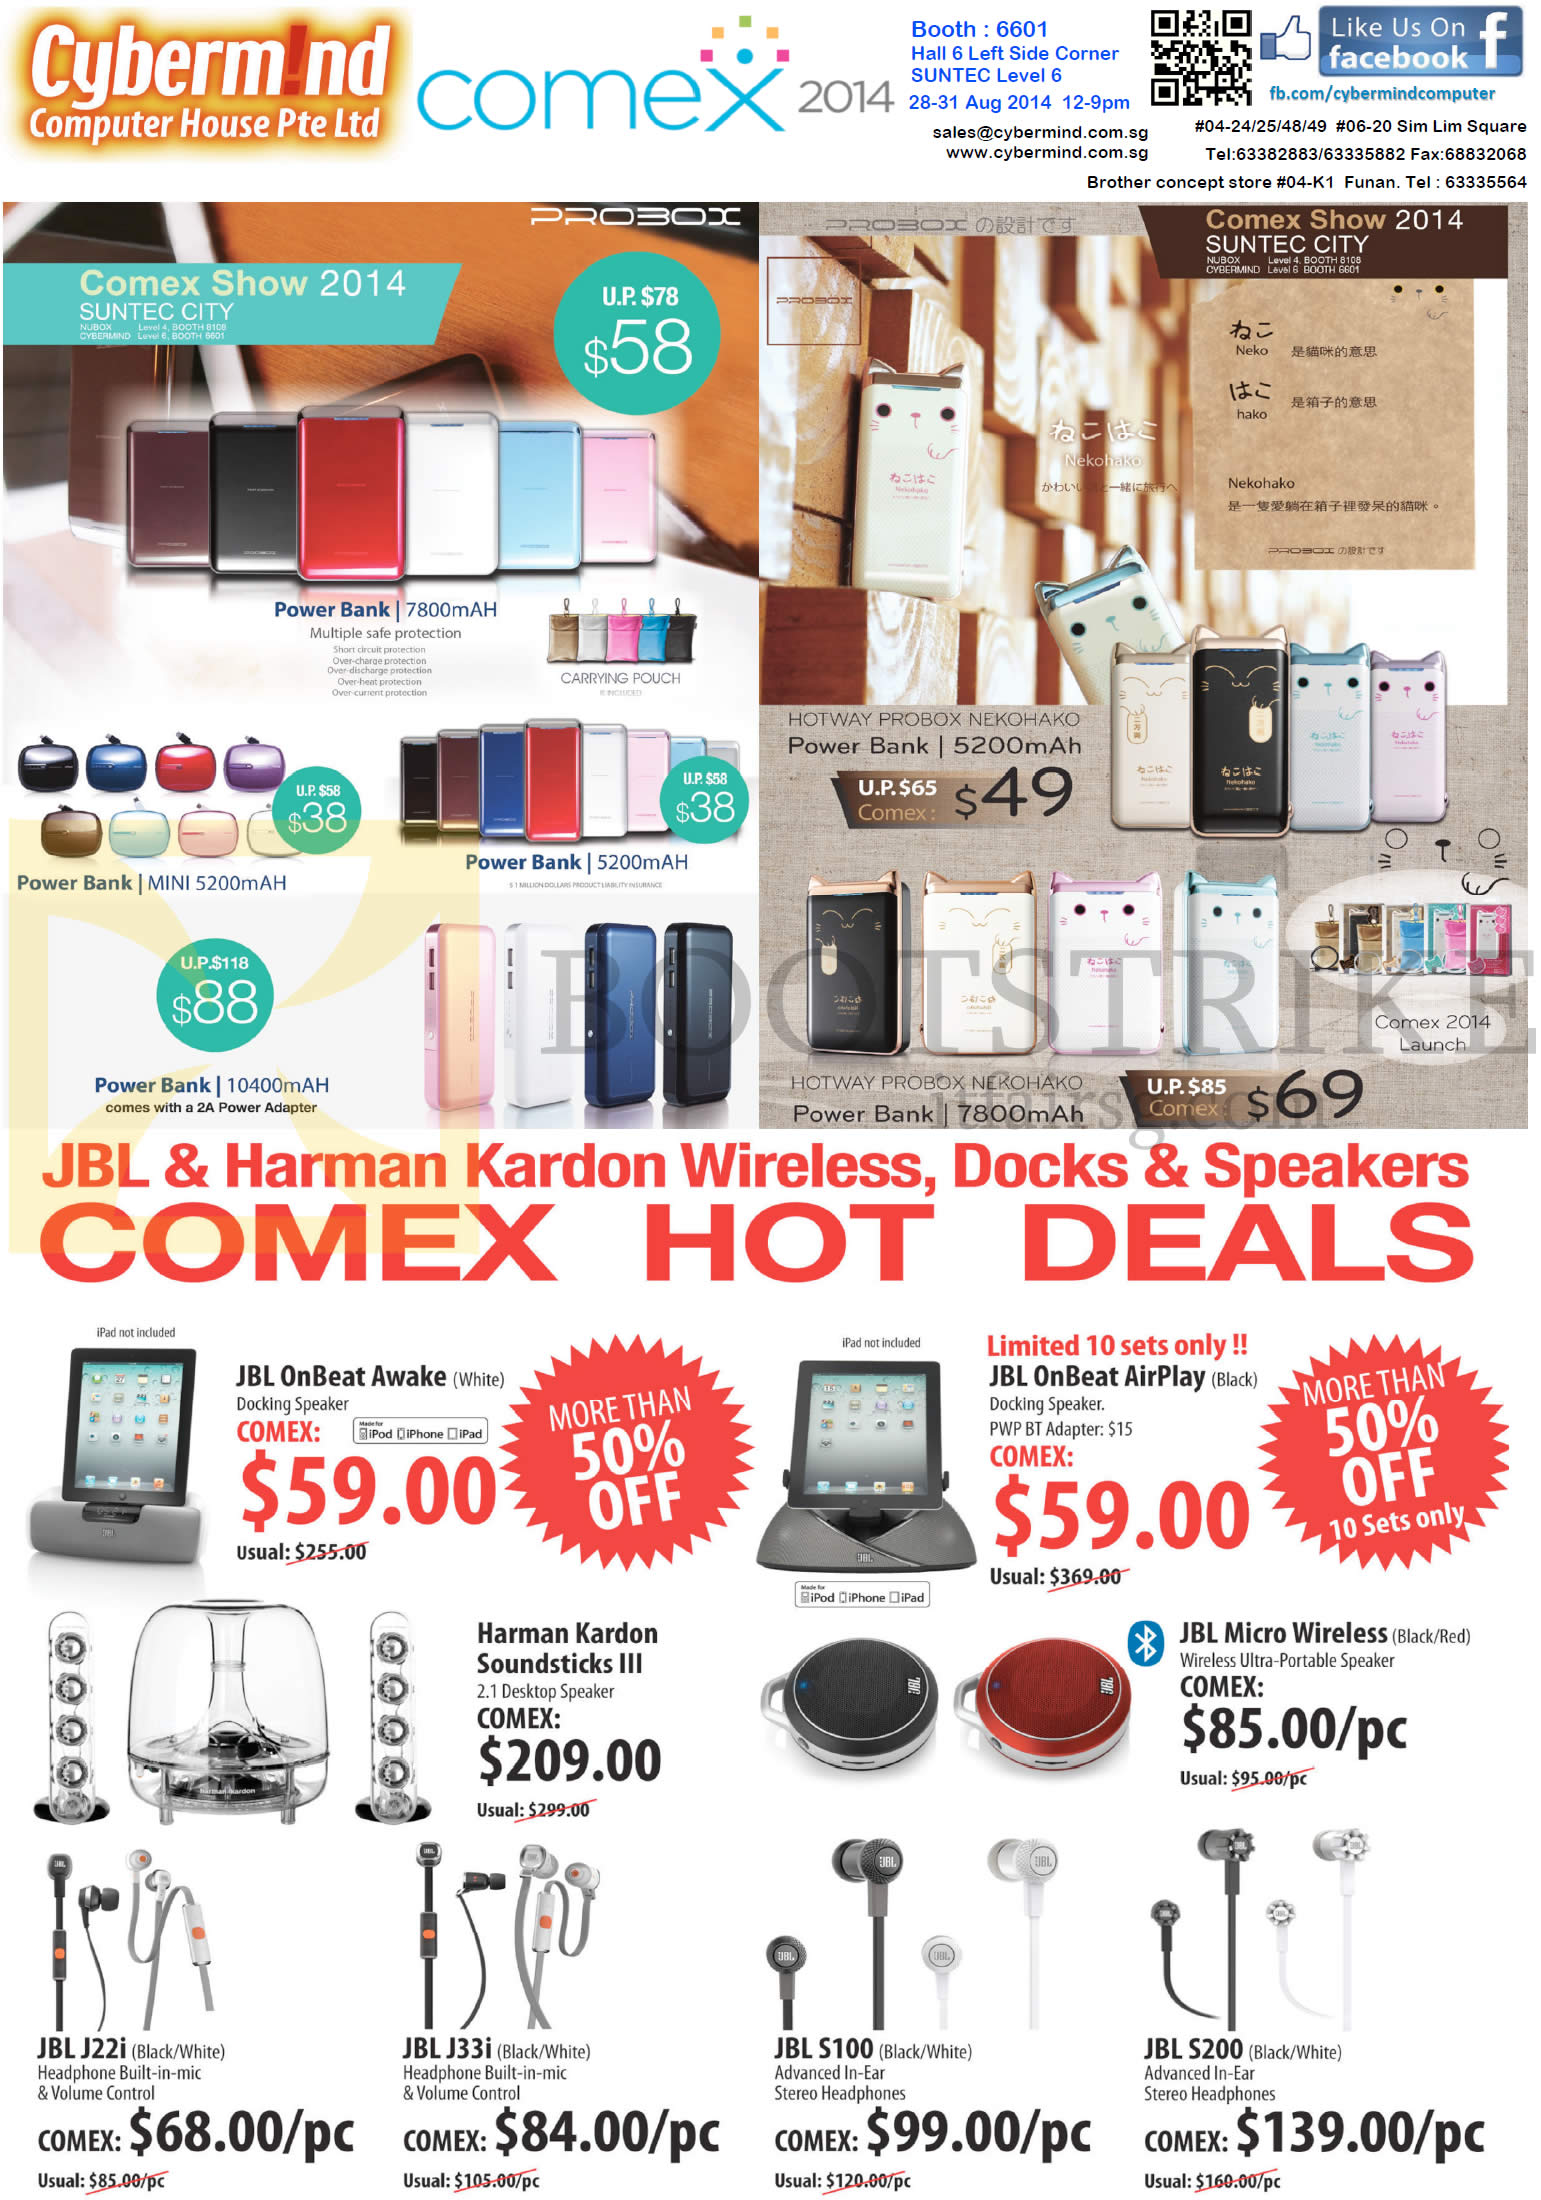 COMEX 2014 price list image brochure of Cybermind Probox Power Banks Nekohako, JBL, Harman Kardon Wireless Docks, Speakers, Earphones, OnBeat, Soundsticks III